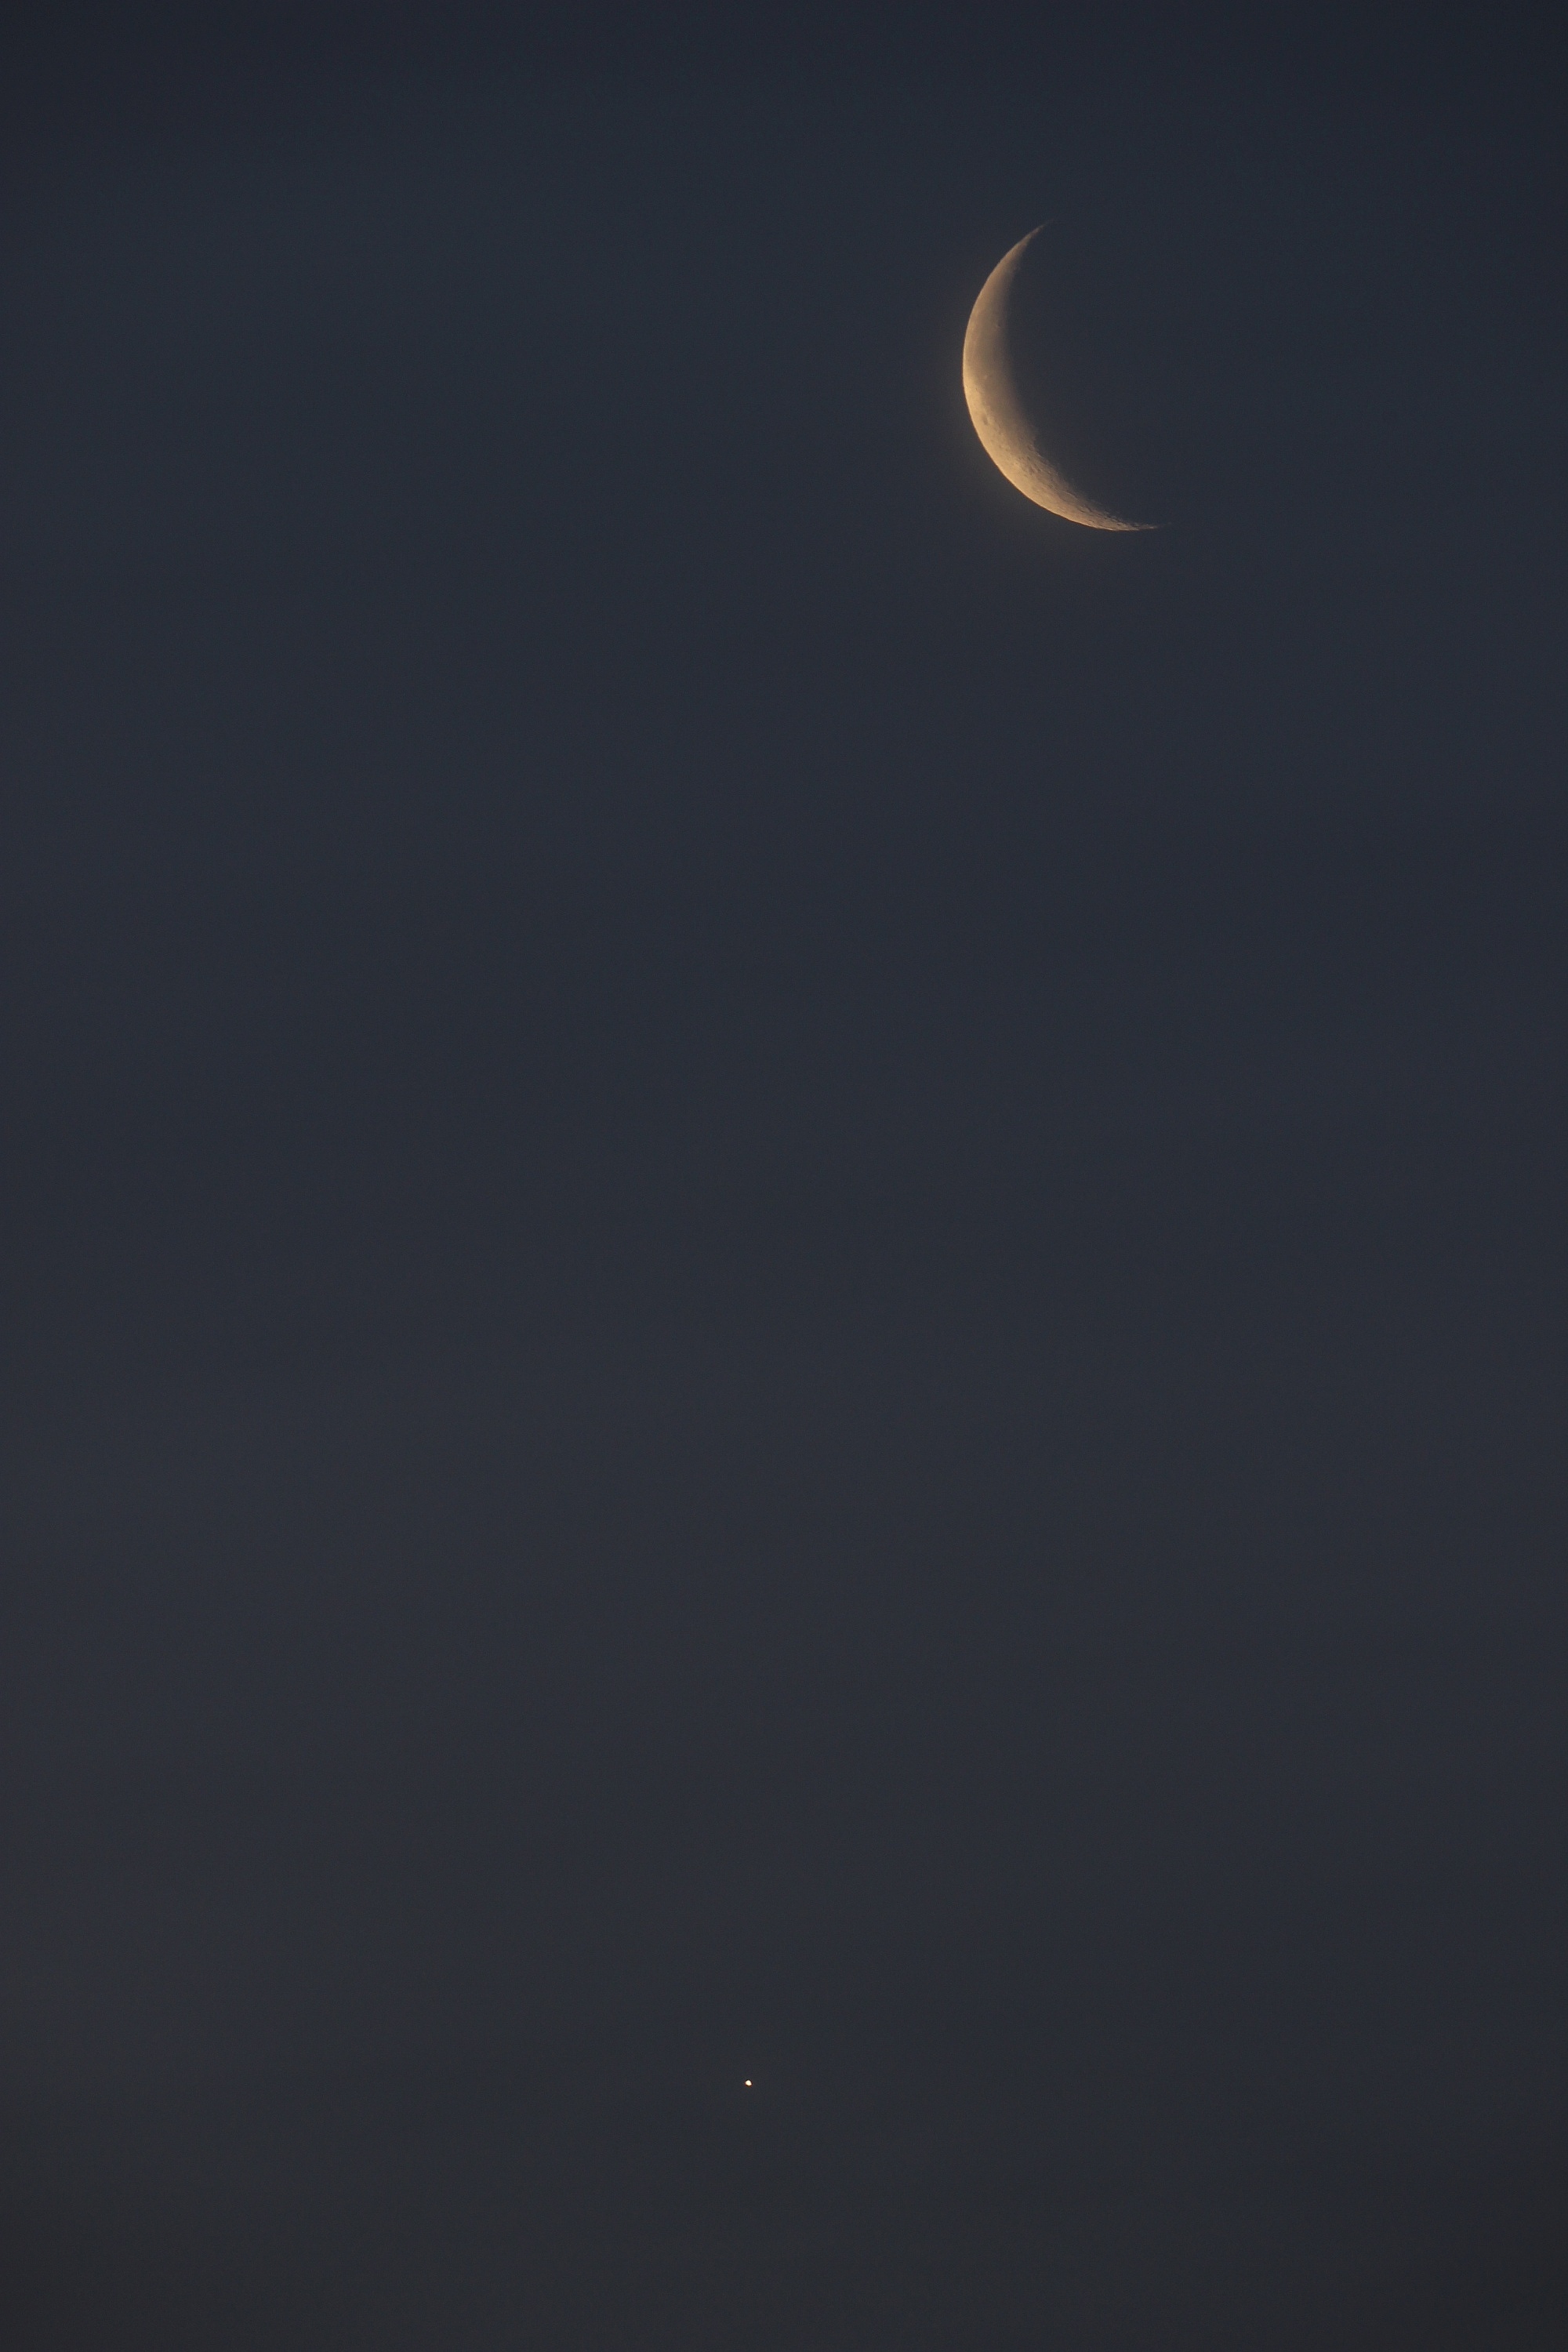 Abnehmende Mondsichel und Venus am 27.3.2014, 5:54 MEZ. 50/330 ED-Apochromat, Canon EOS 600D, ISO 200, 1/30s